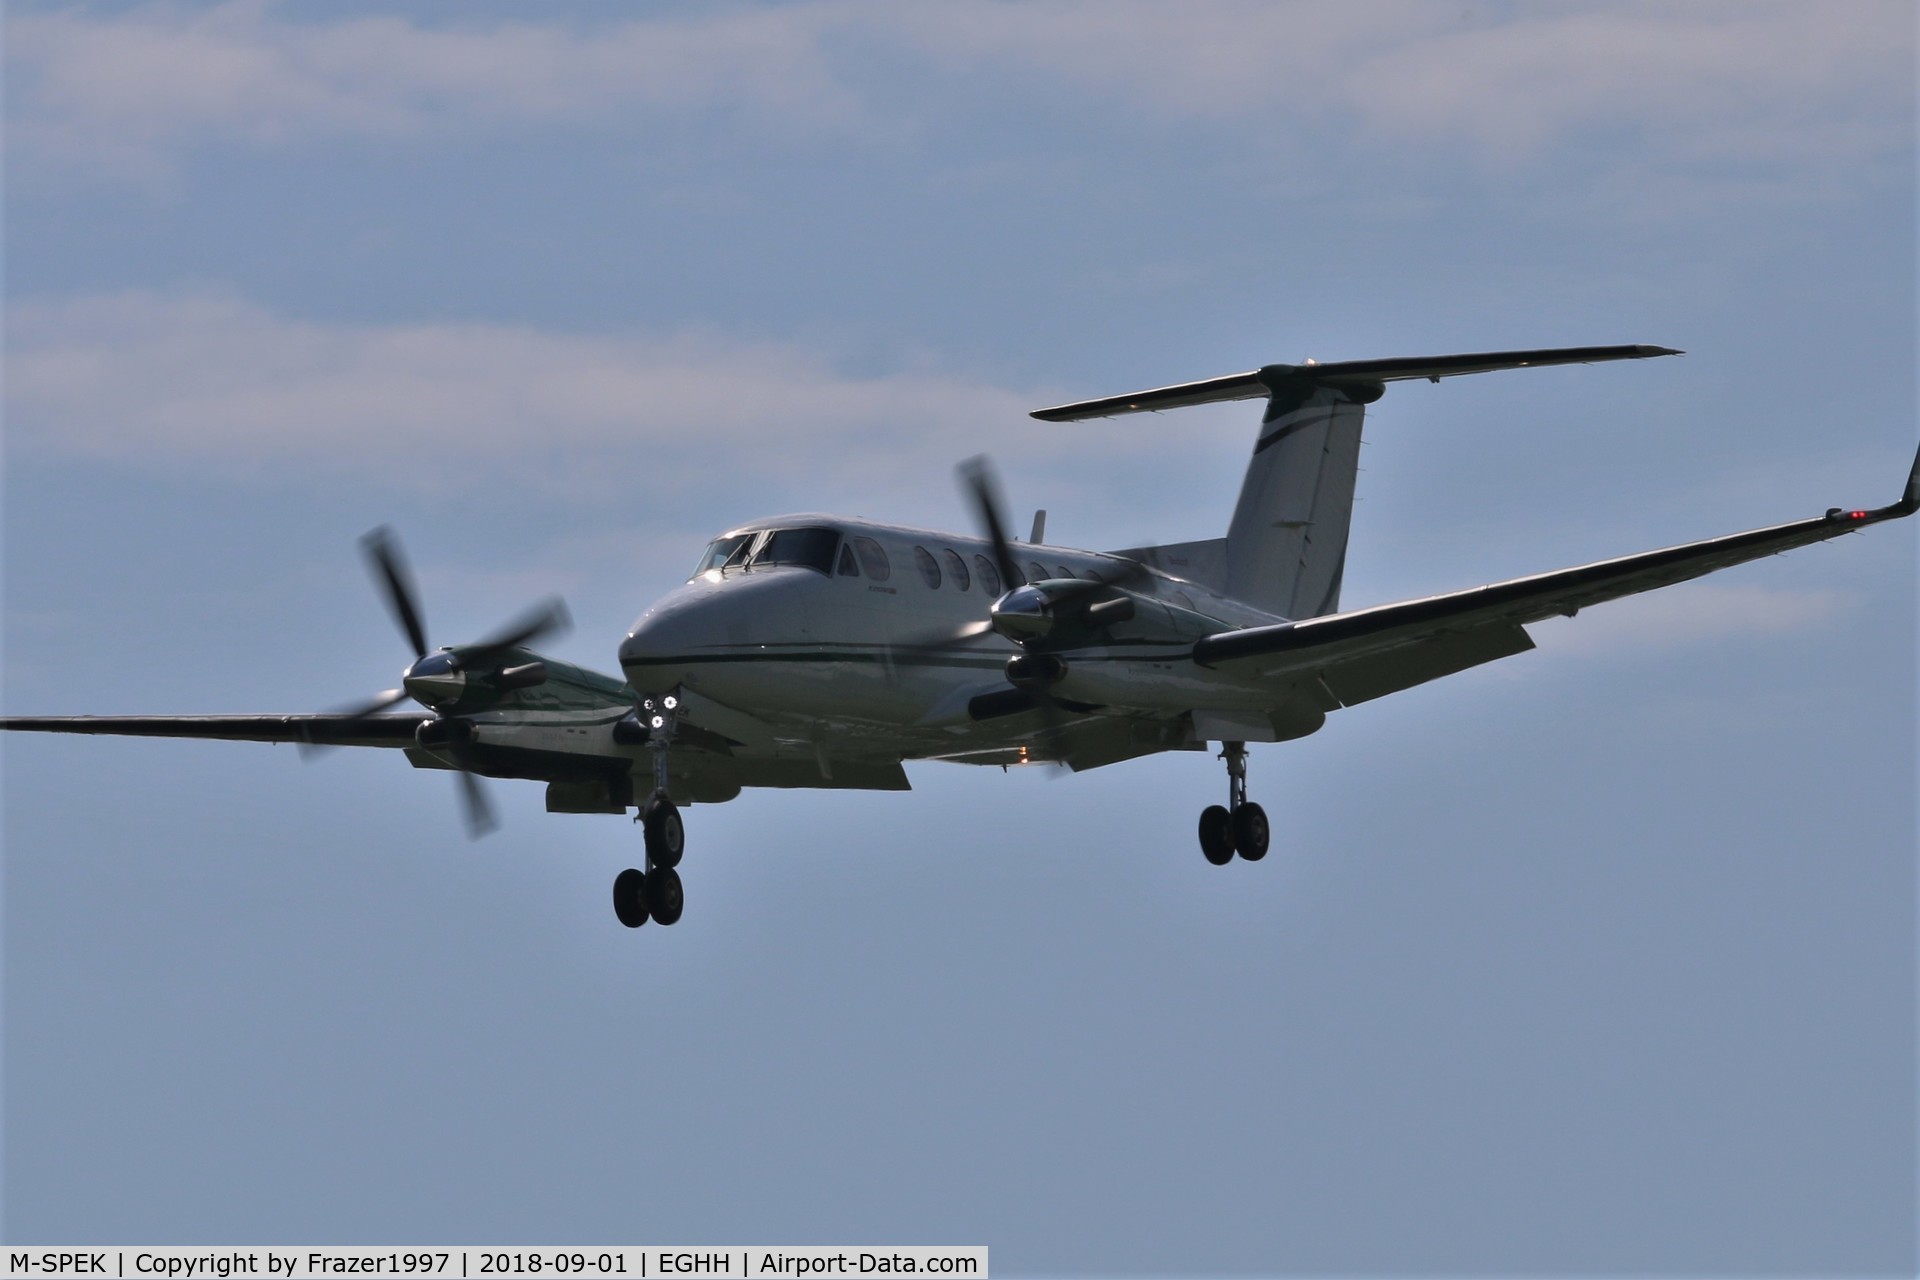 M-SPEK, 2013 Beech B350 King Air C/N FL-959, Landing on RW08 at Bournemouth airport (EGHH)